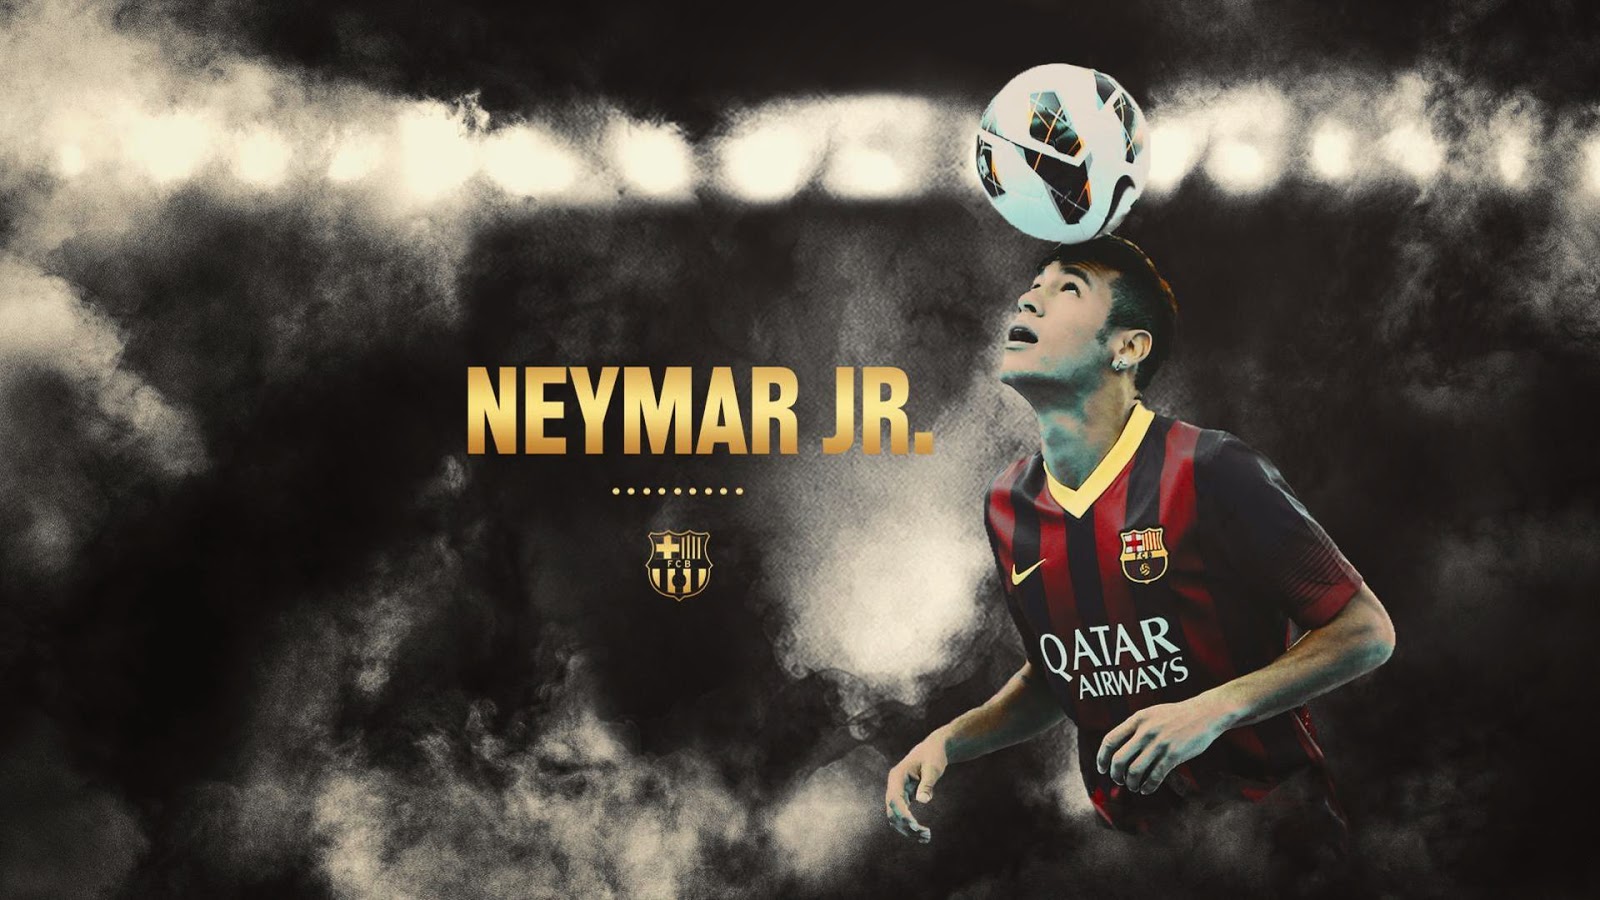 Best Neymar Wallpaper - Hình Ảnh Nền Neymar Đẹp Nhất